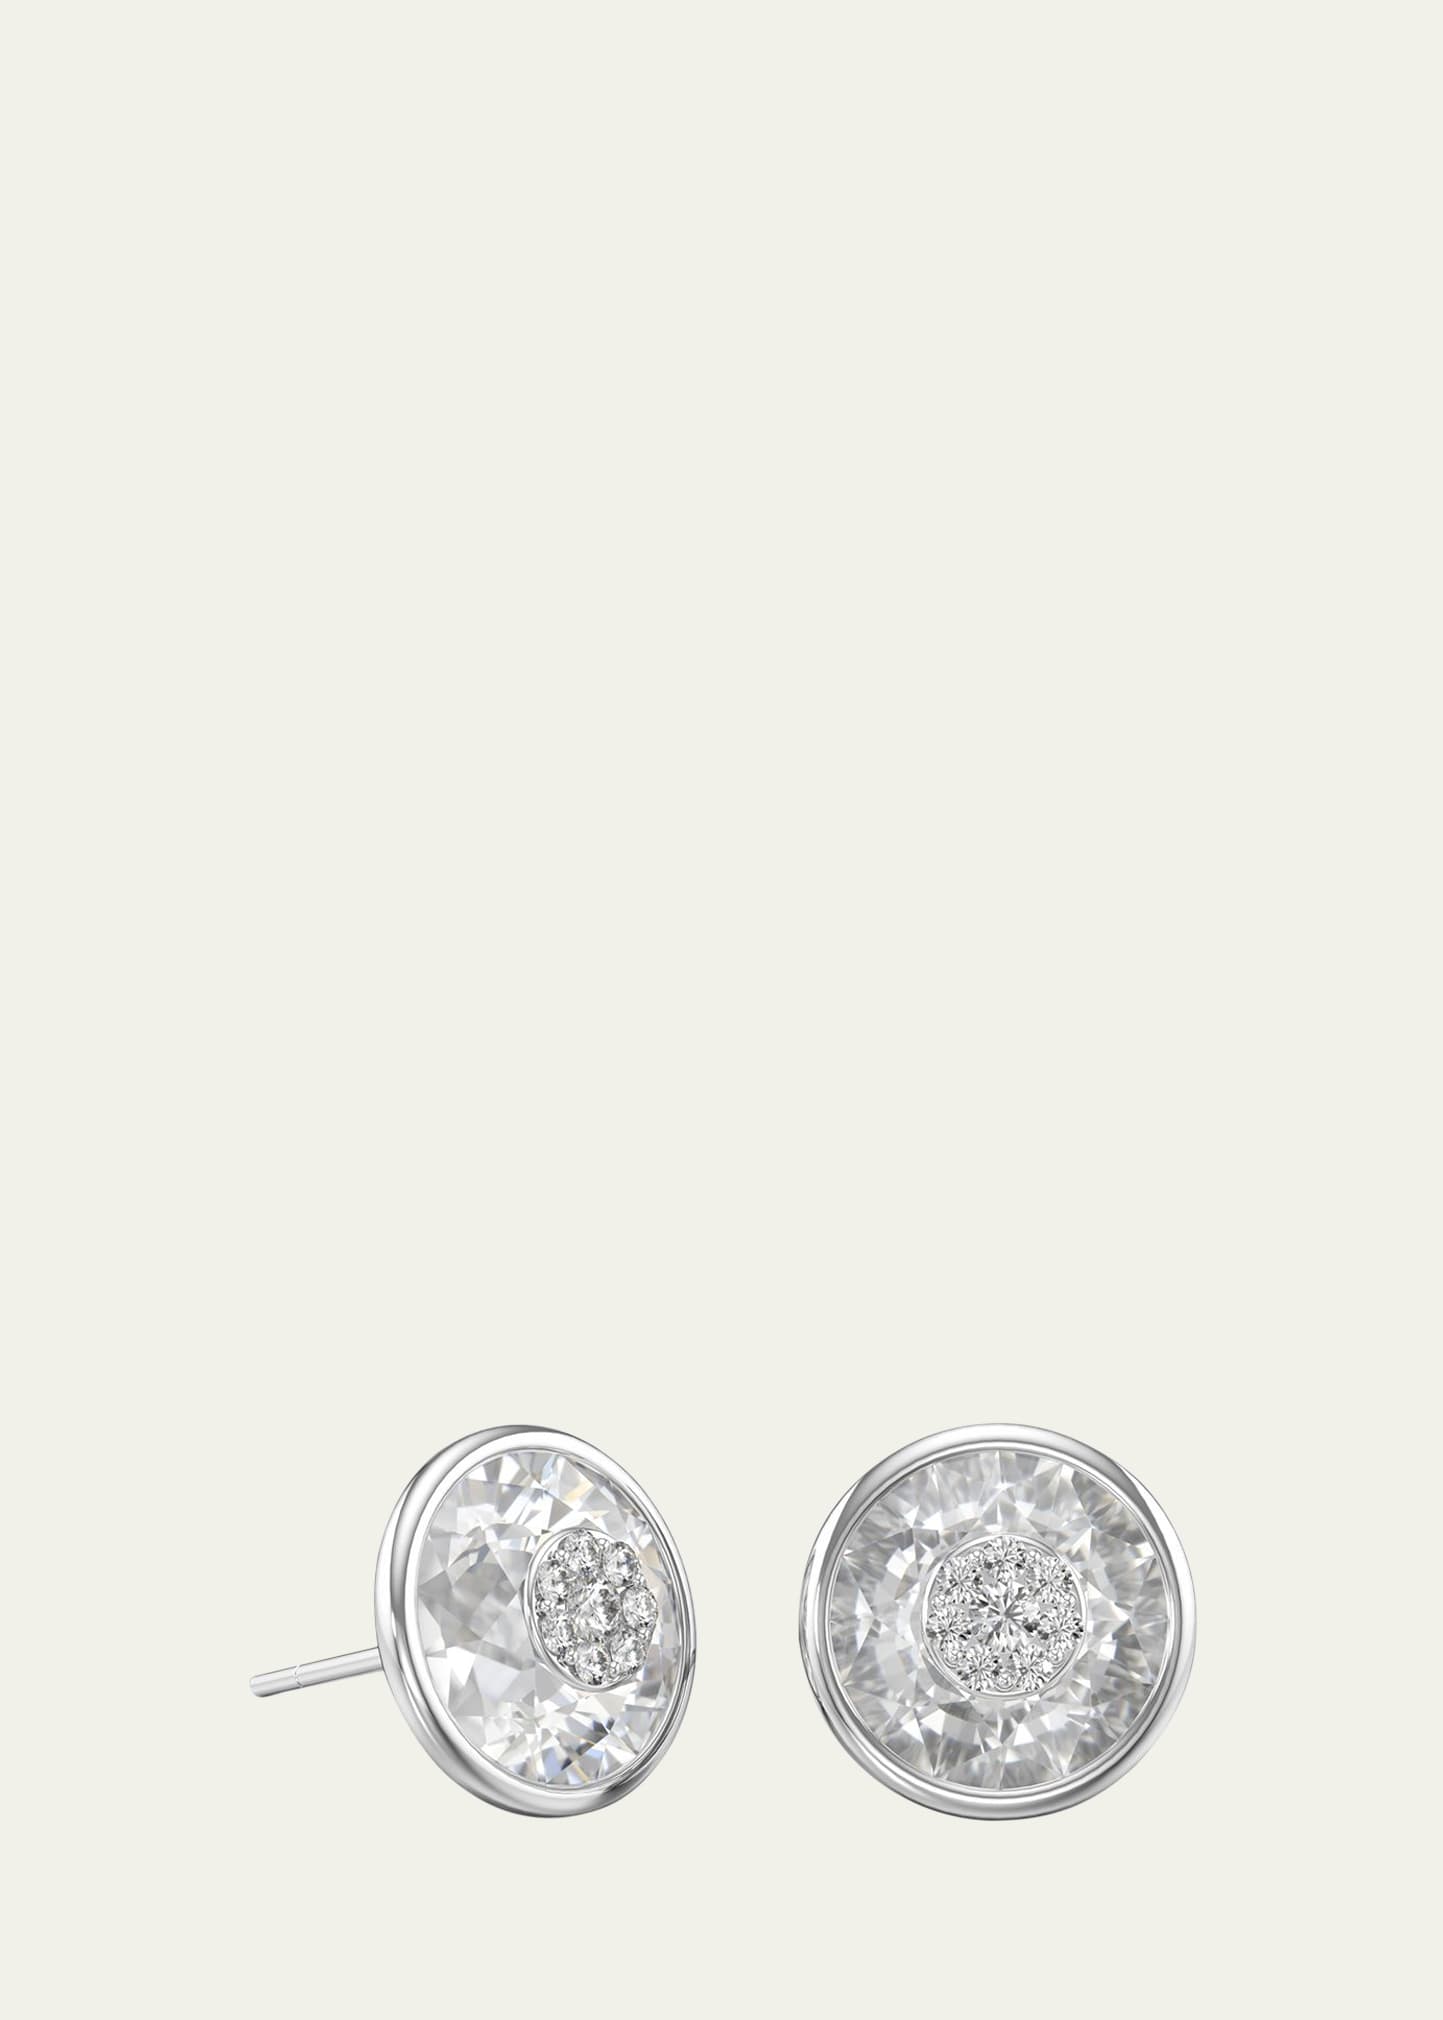 Bhansali 18k White Gold 10mm Round Stud Earrings w/ Diamonds